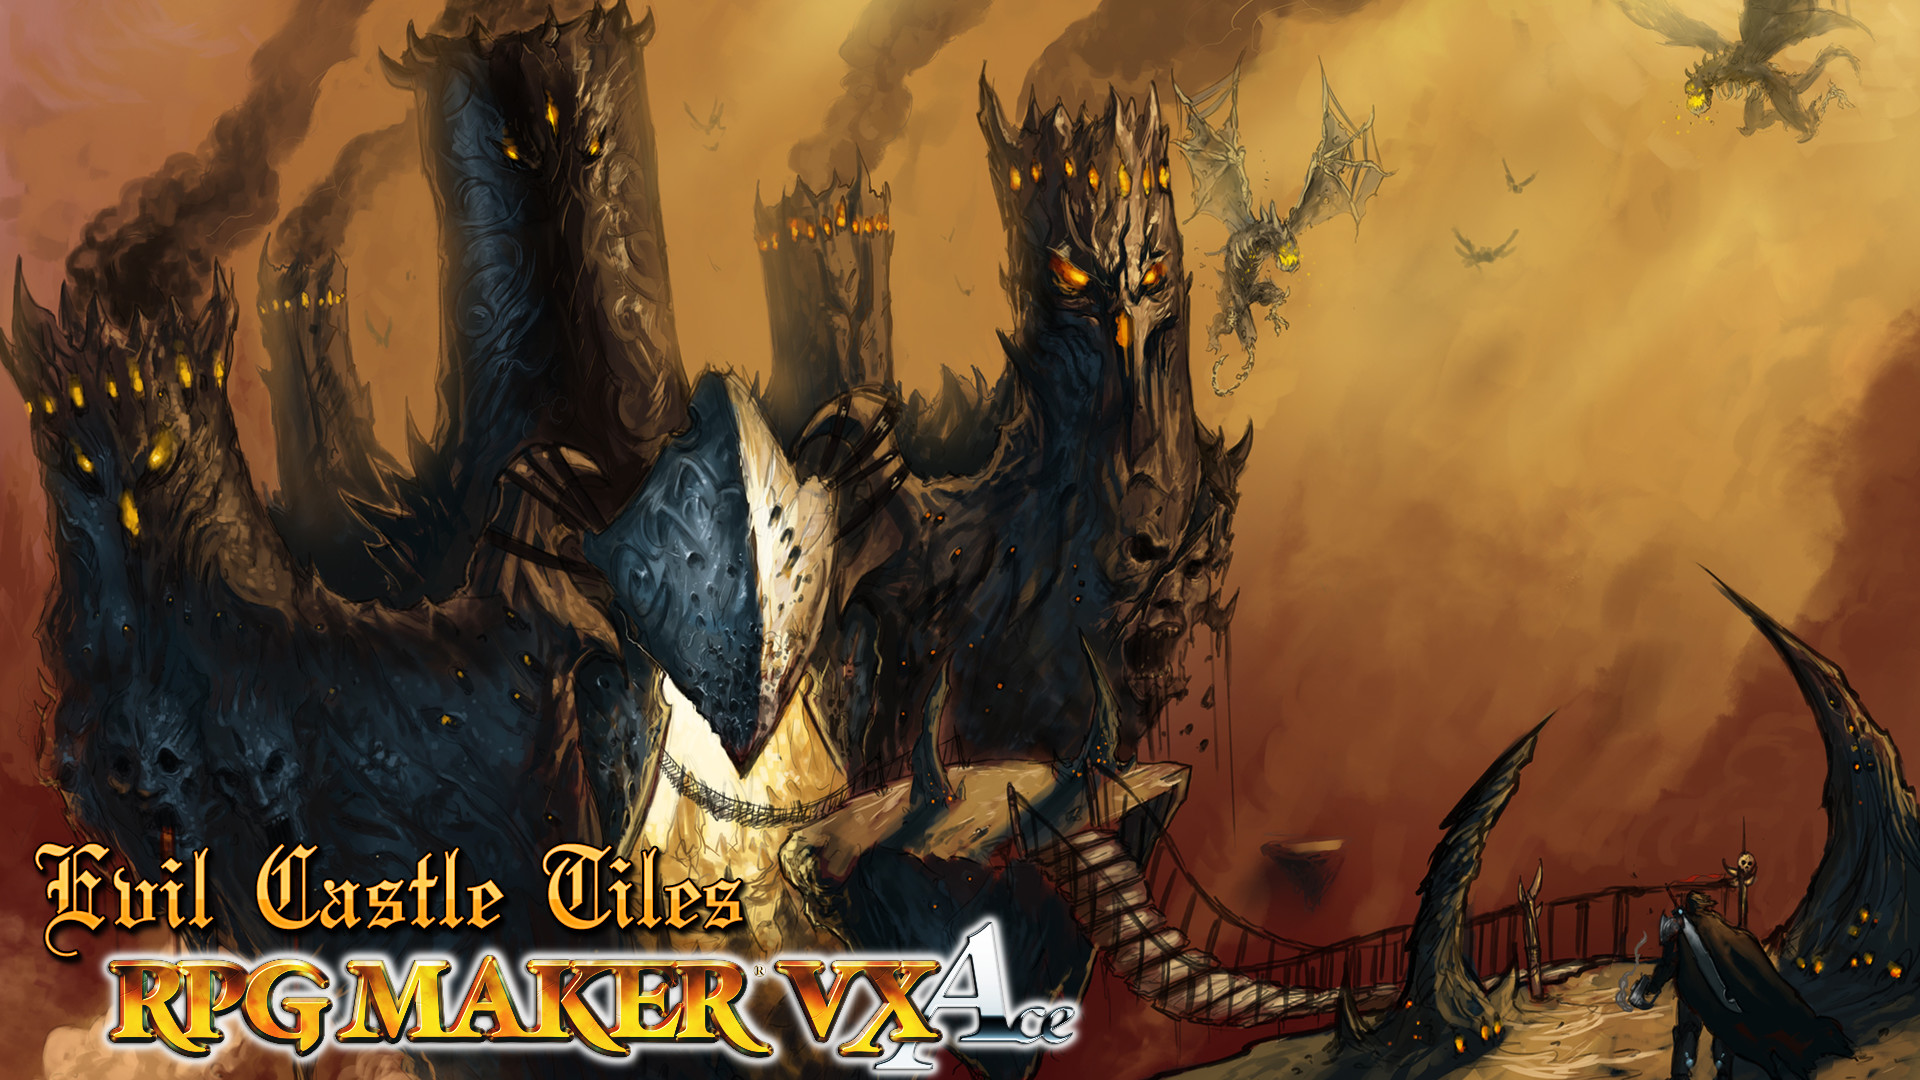 RPG Maker VX Ace - Evil Castle Tiles Pack Featured Screenshot #1